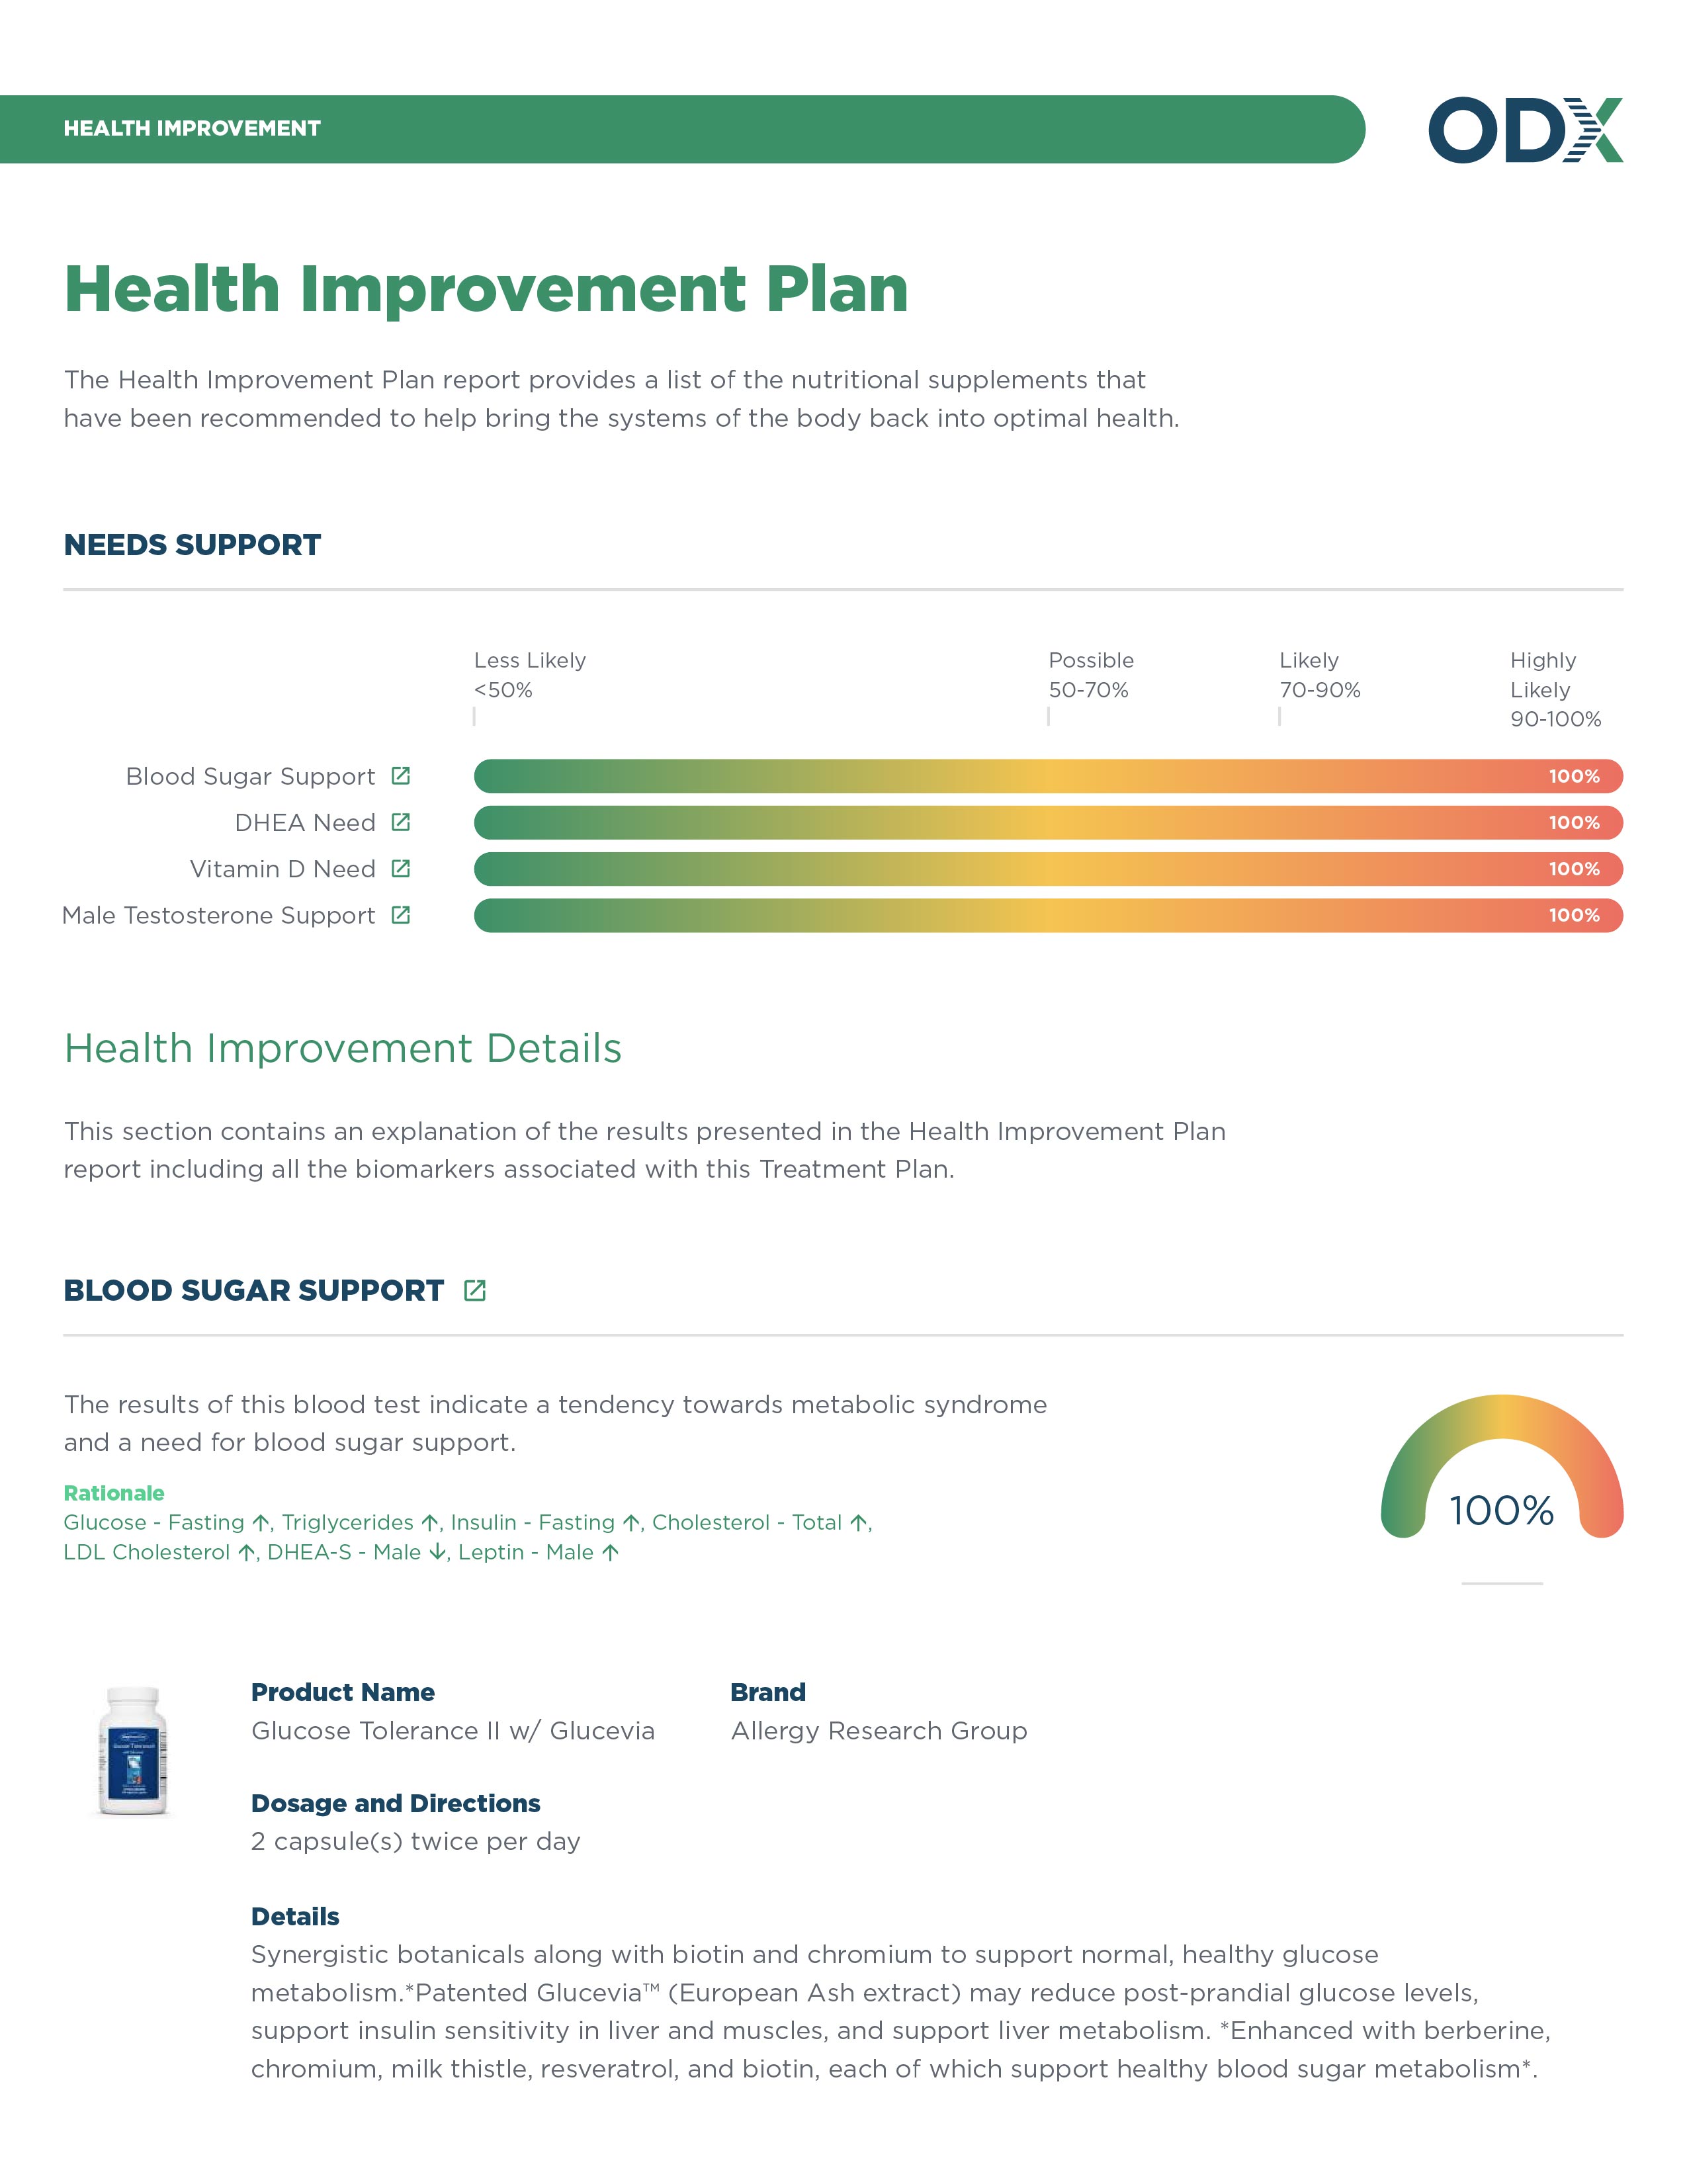 Health Improvement Plan Report Images_HIP V2.1